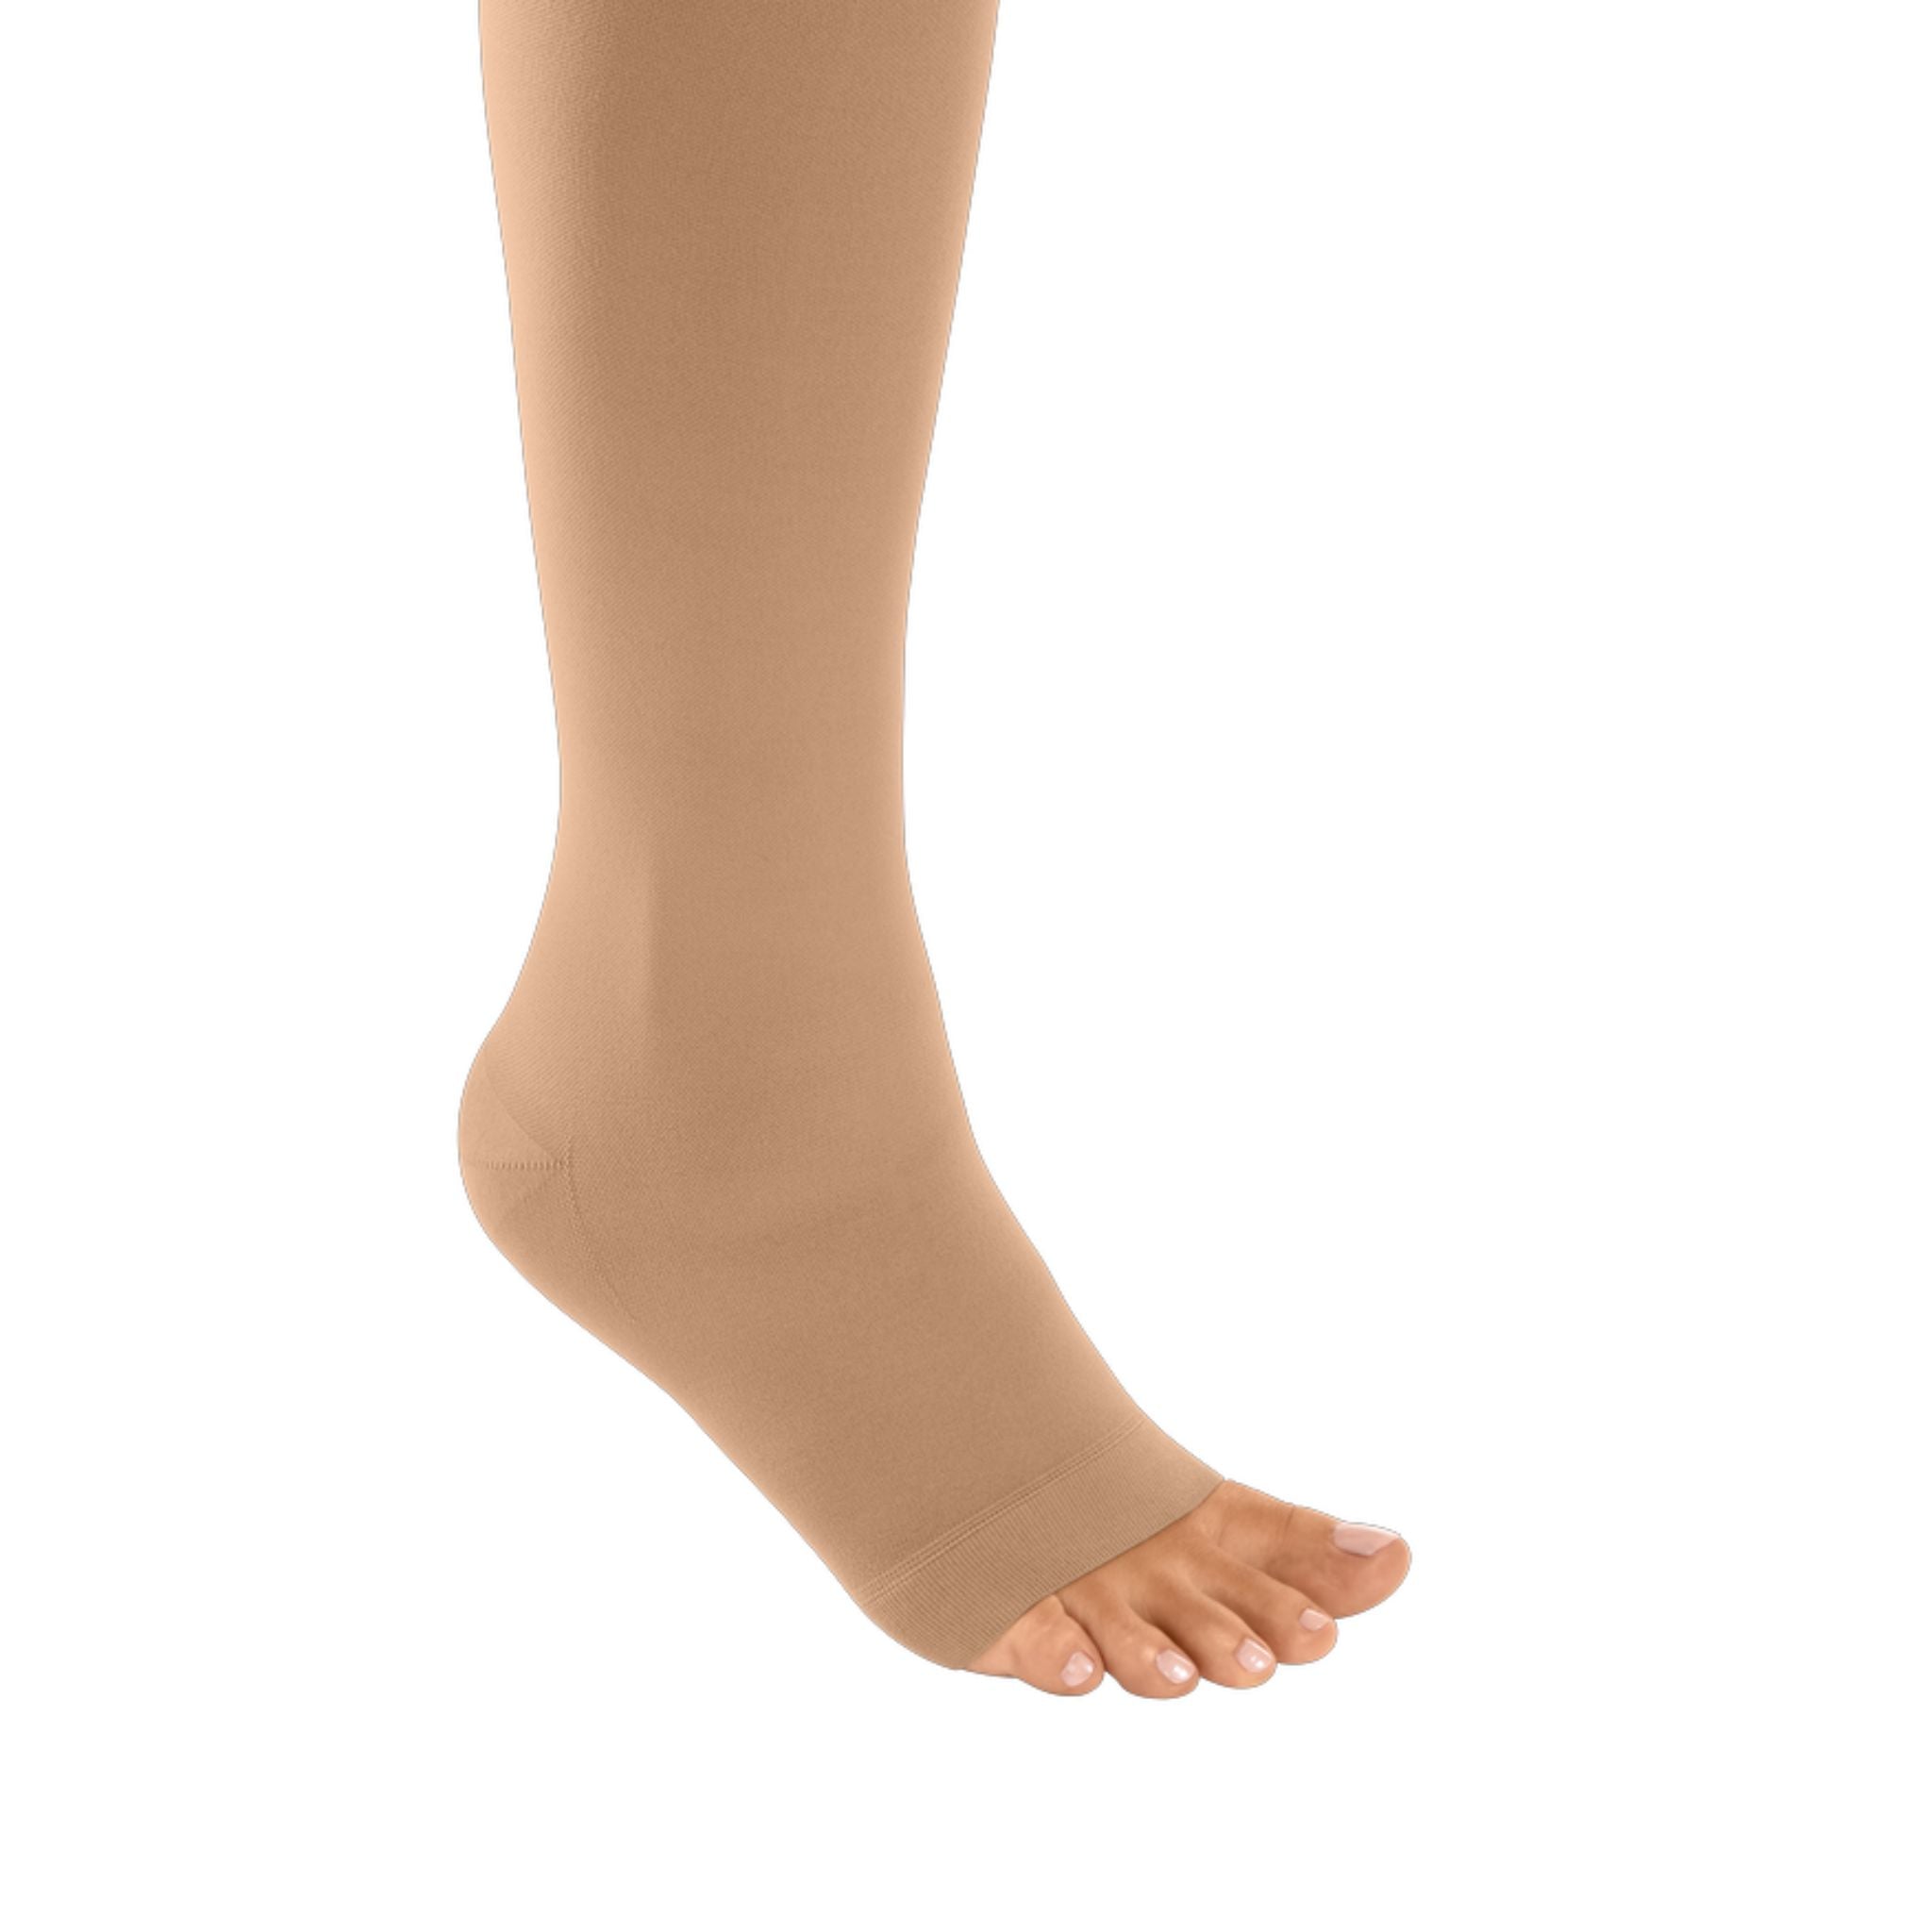 Compression Stockings  Below Knee  Open Toe  Caramel  mediven cotton